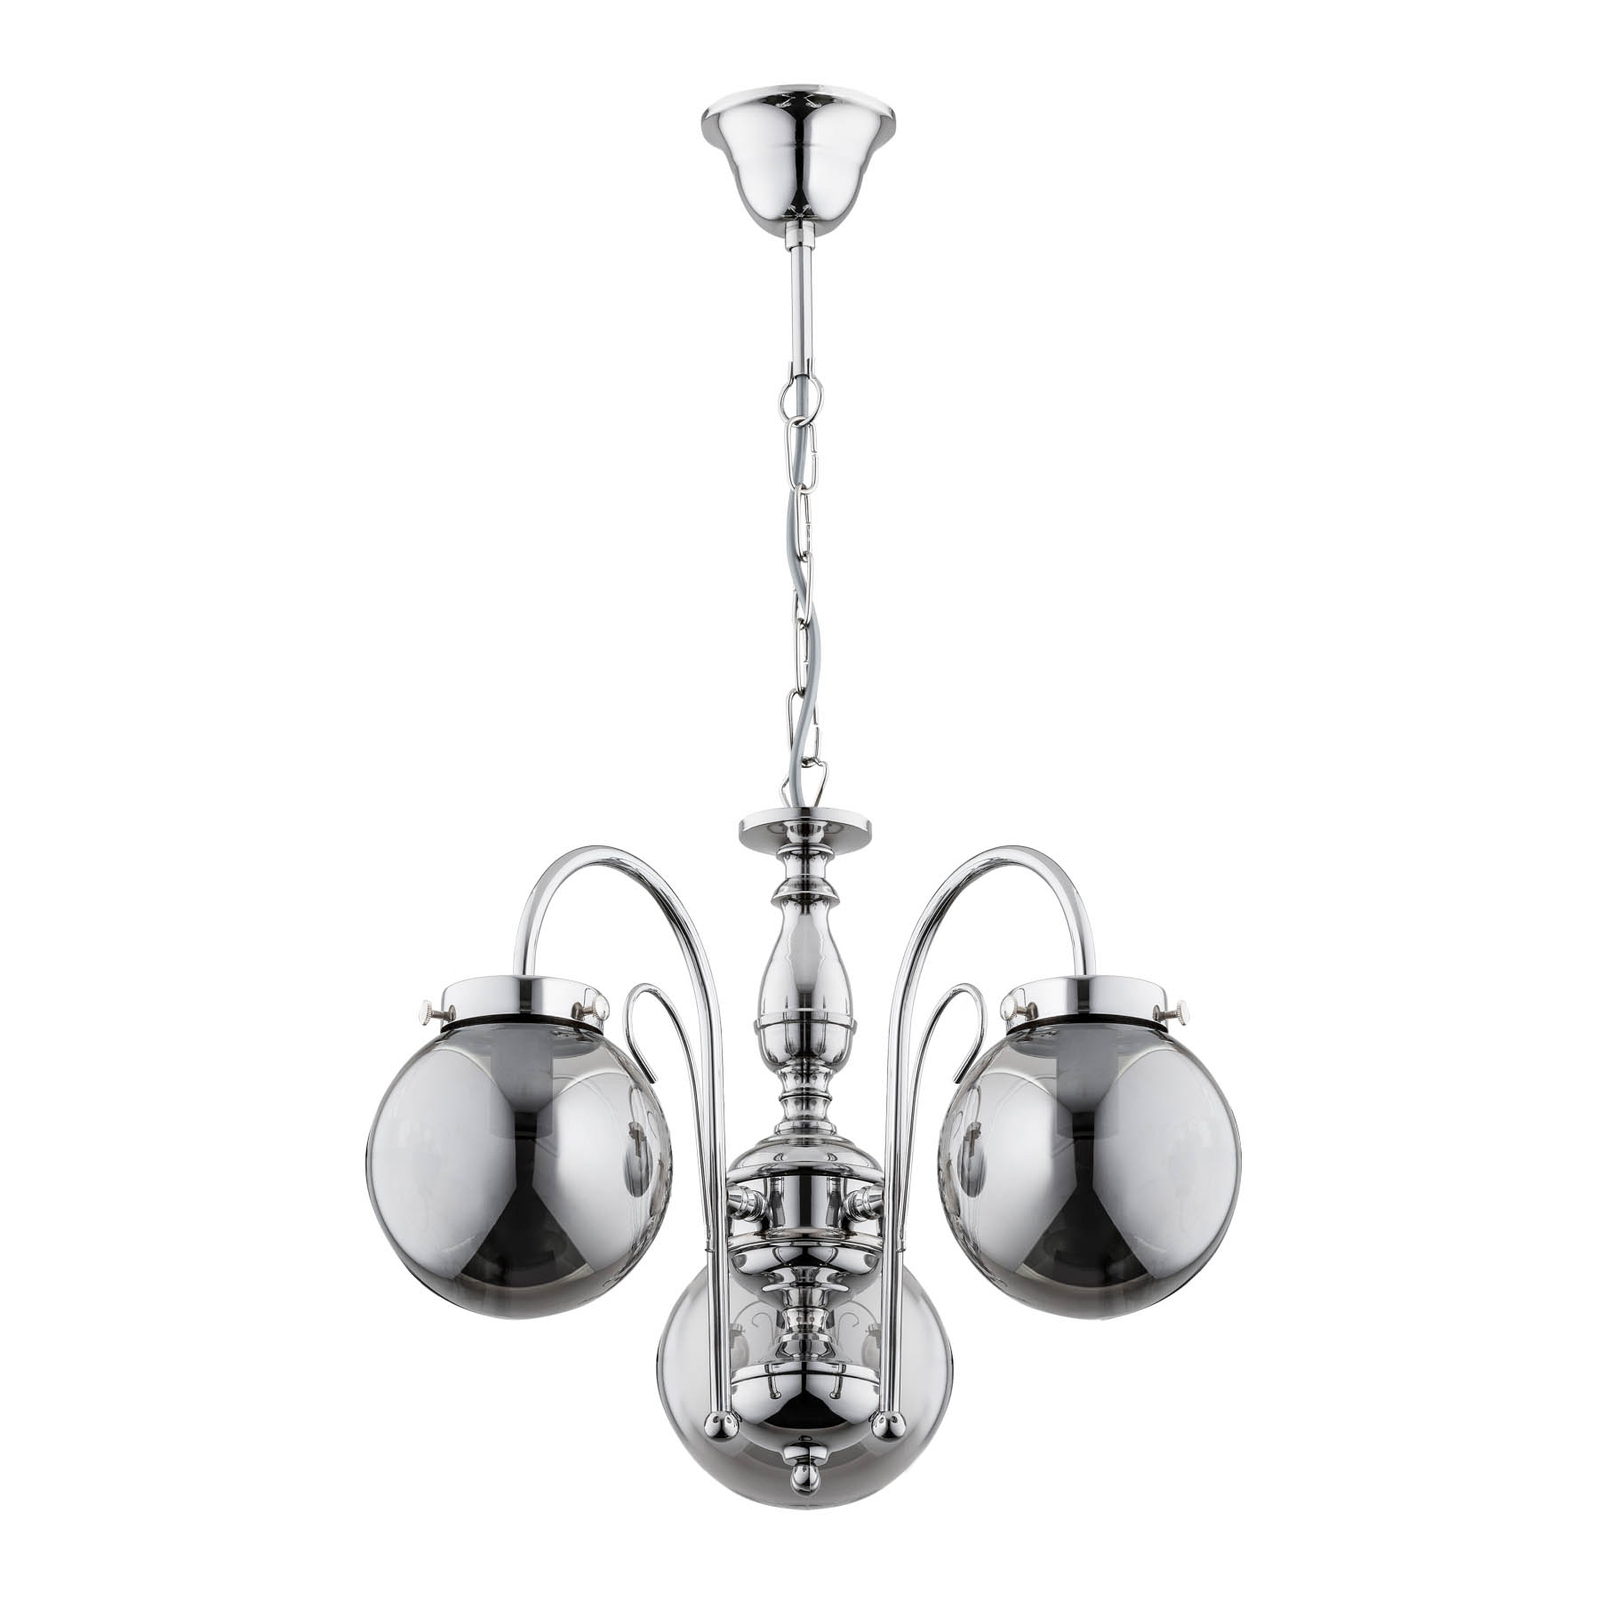 Hector chandelier, silver, three-bulb